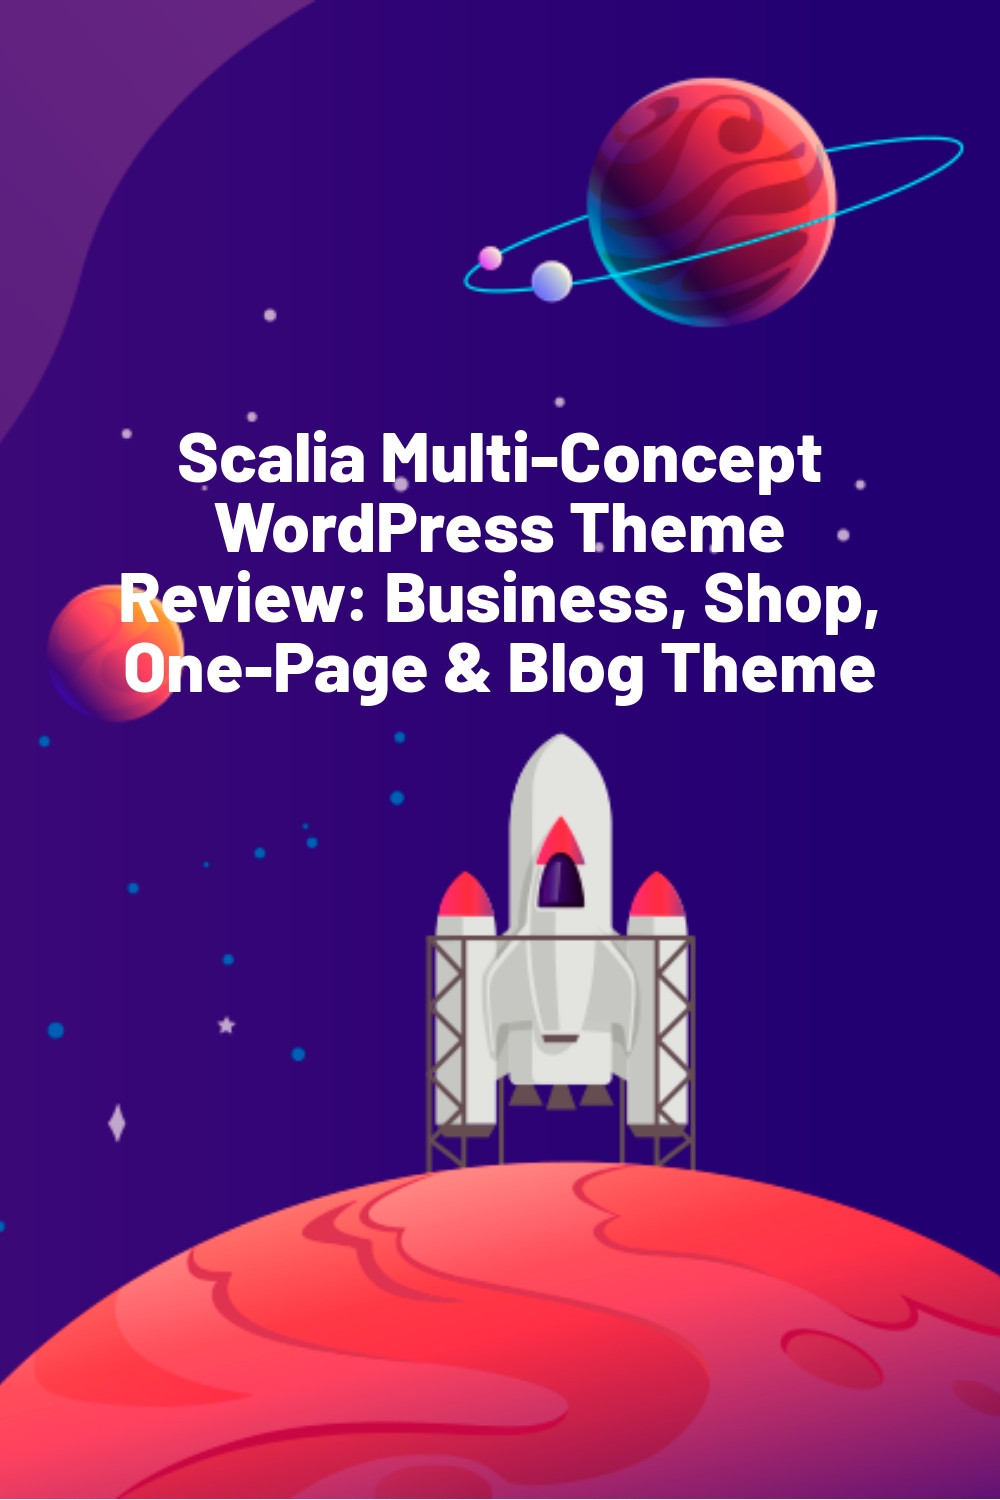 Scalia Multi-Concept WordPress Theme Review: Business, Shop, One-Page & Blog Theme